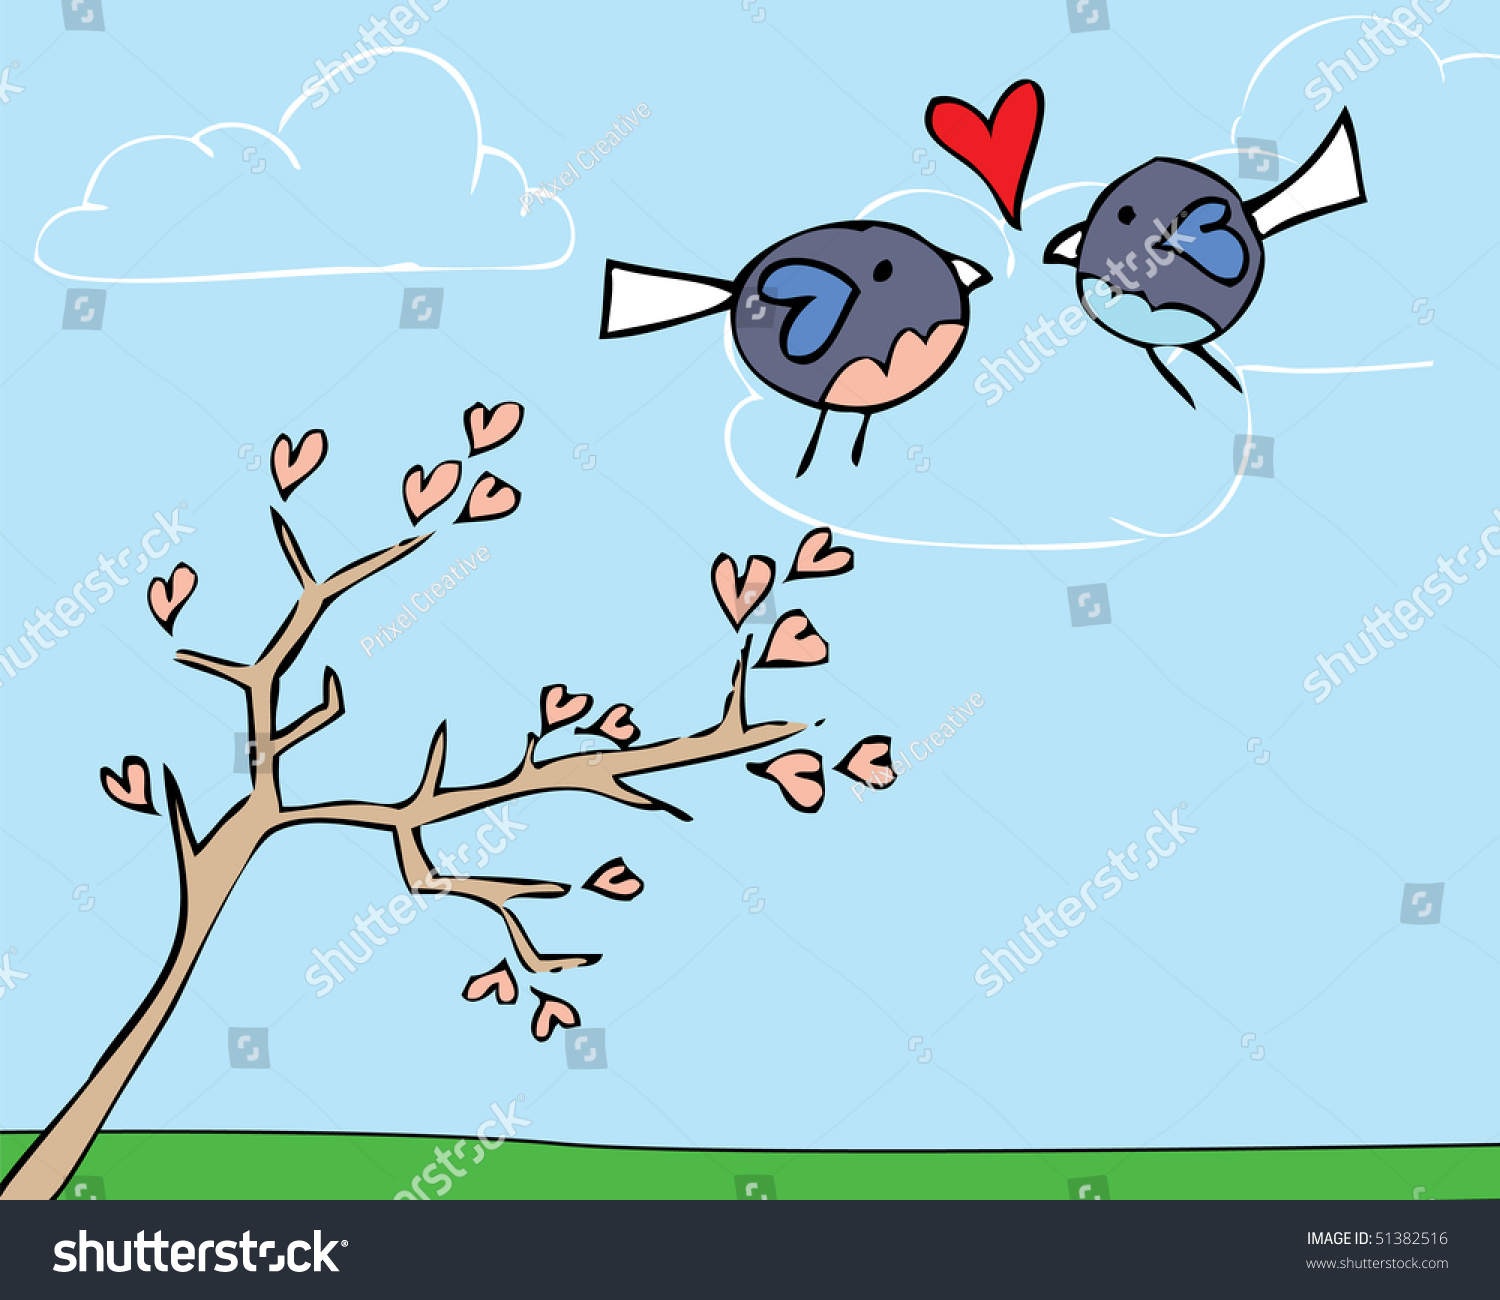 Hand Drawn, Cute Lovebirds Vector. - 51382516 : Shutterstock